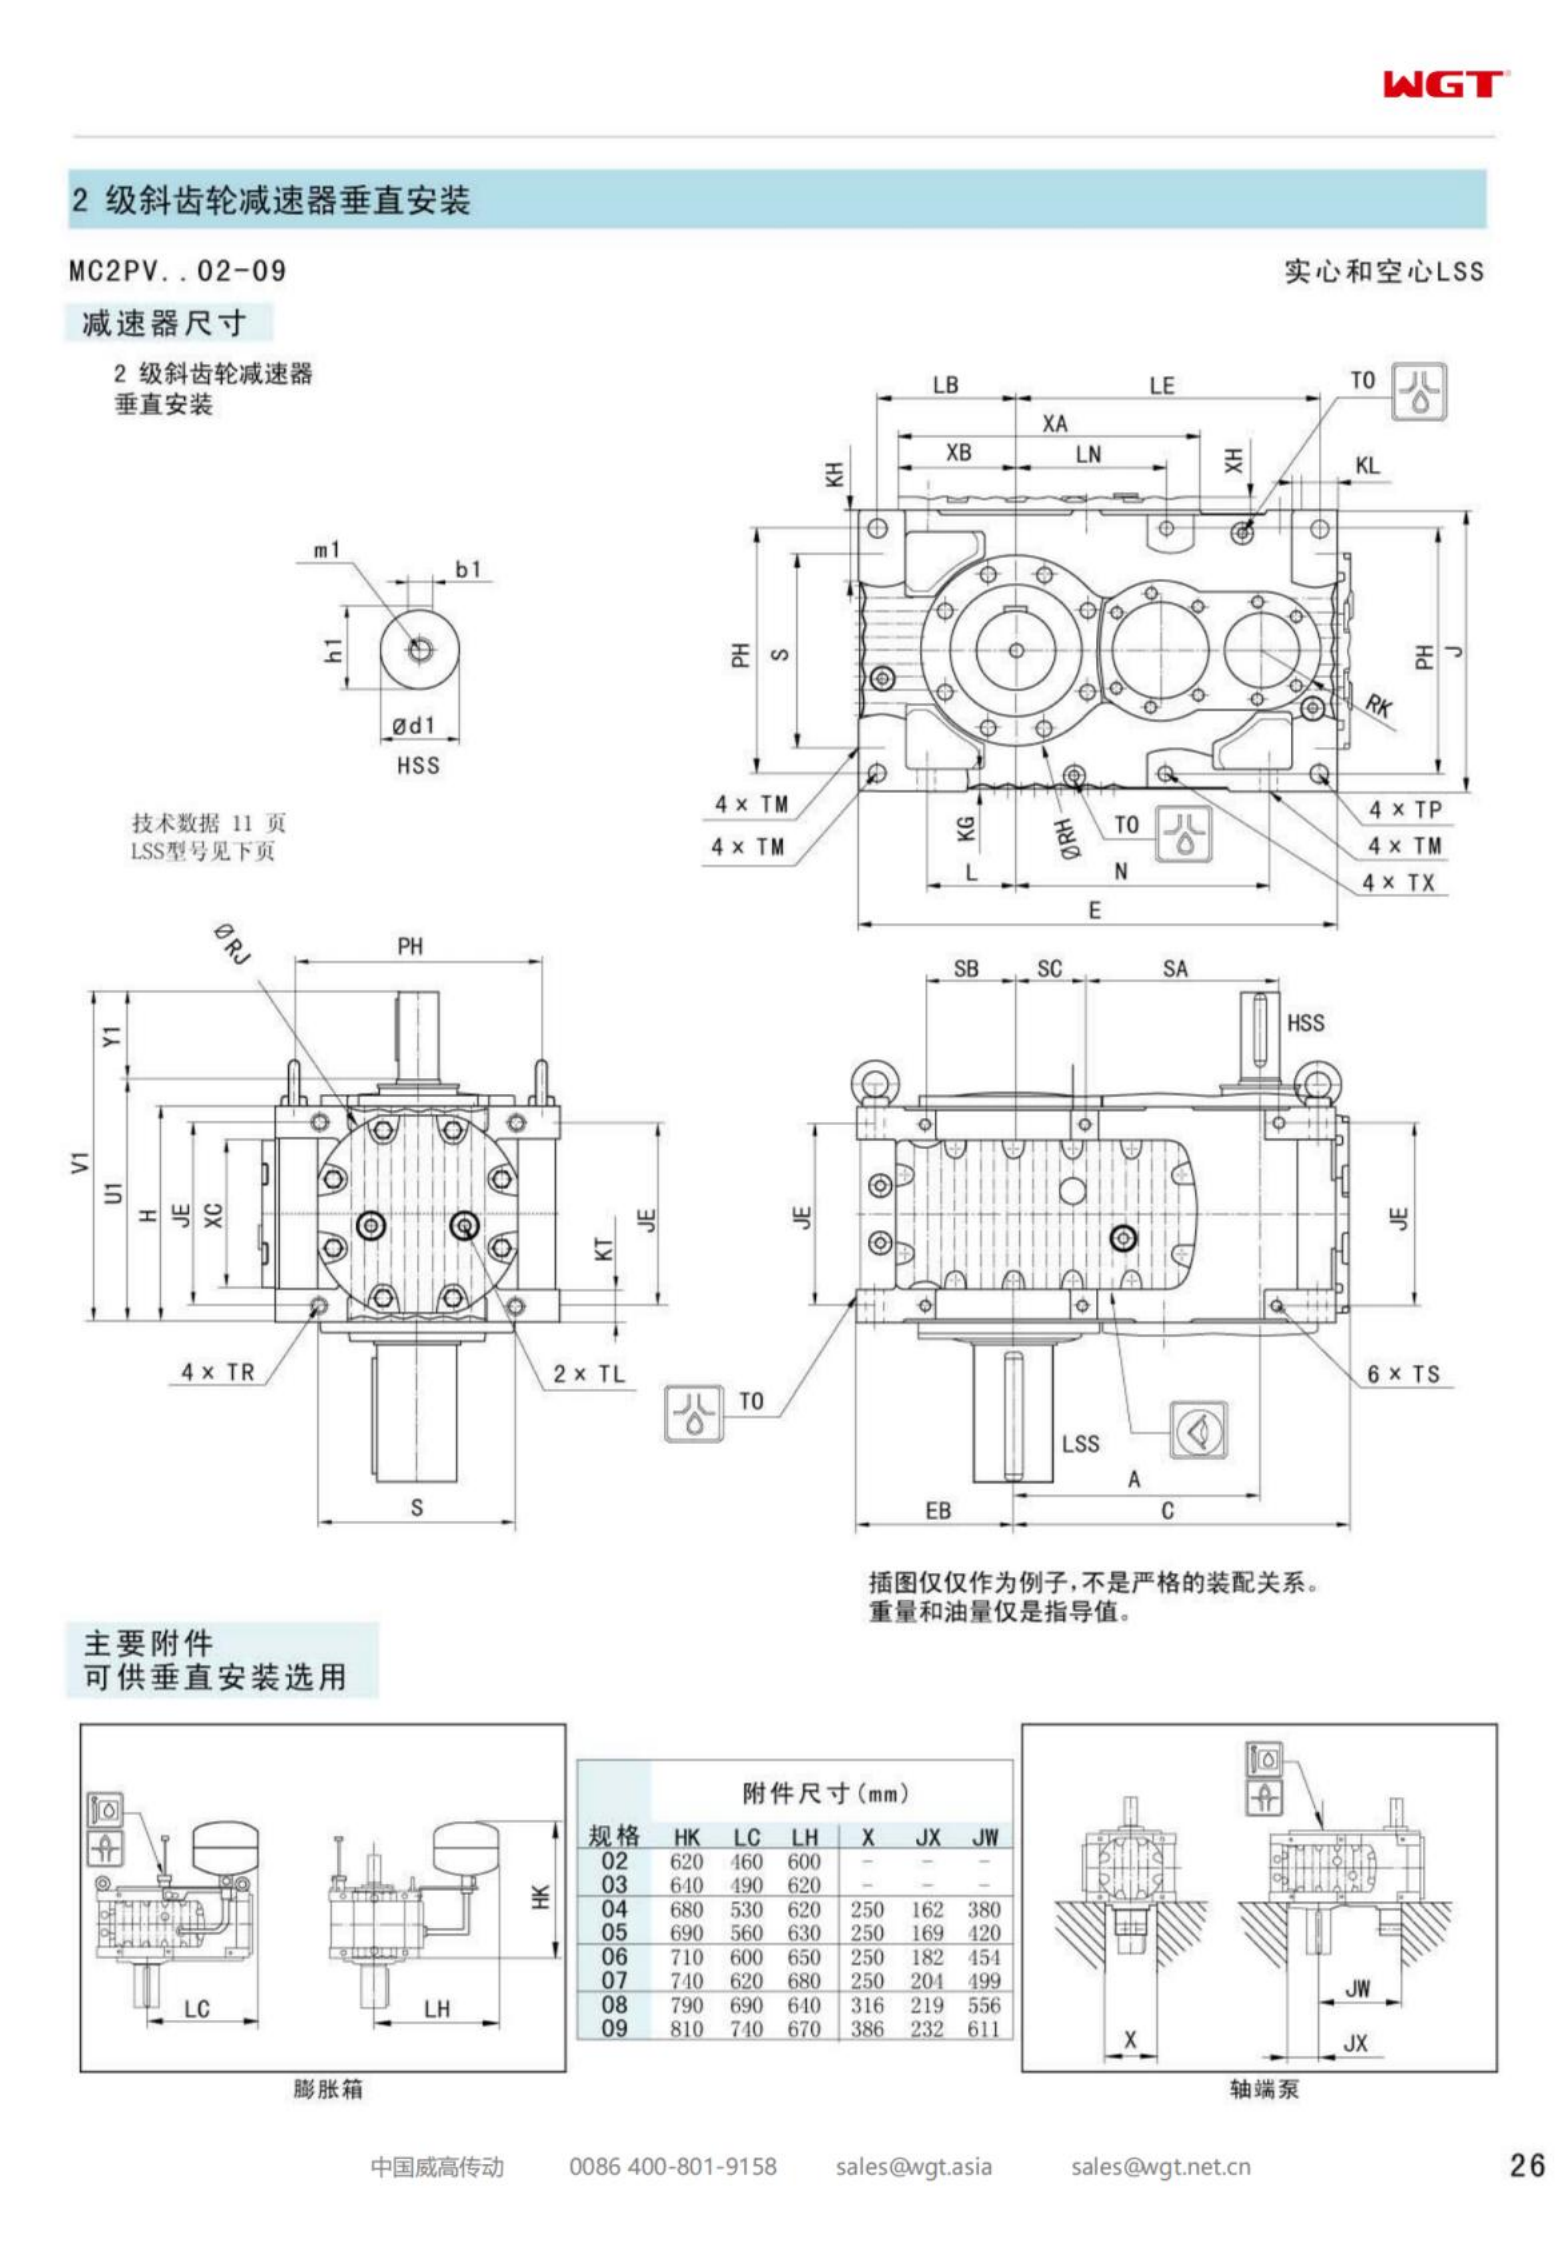 MC2PVHF02 replaces _SEW_MC_Series gearbox (patent)